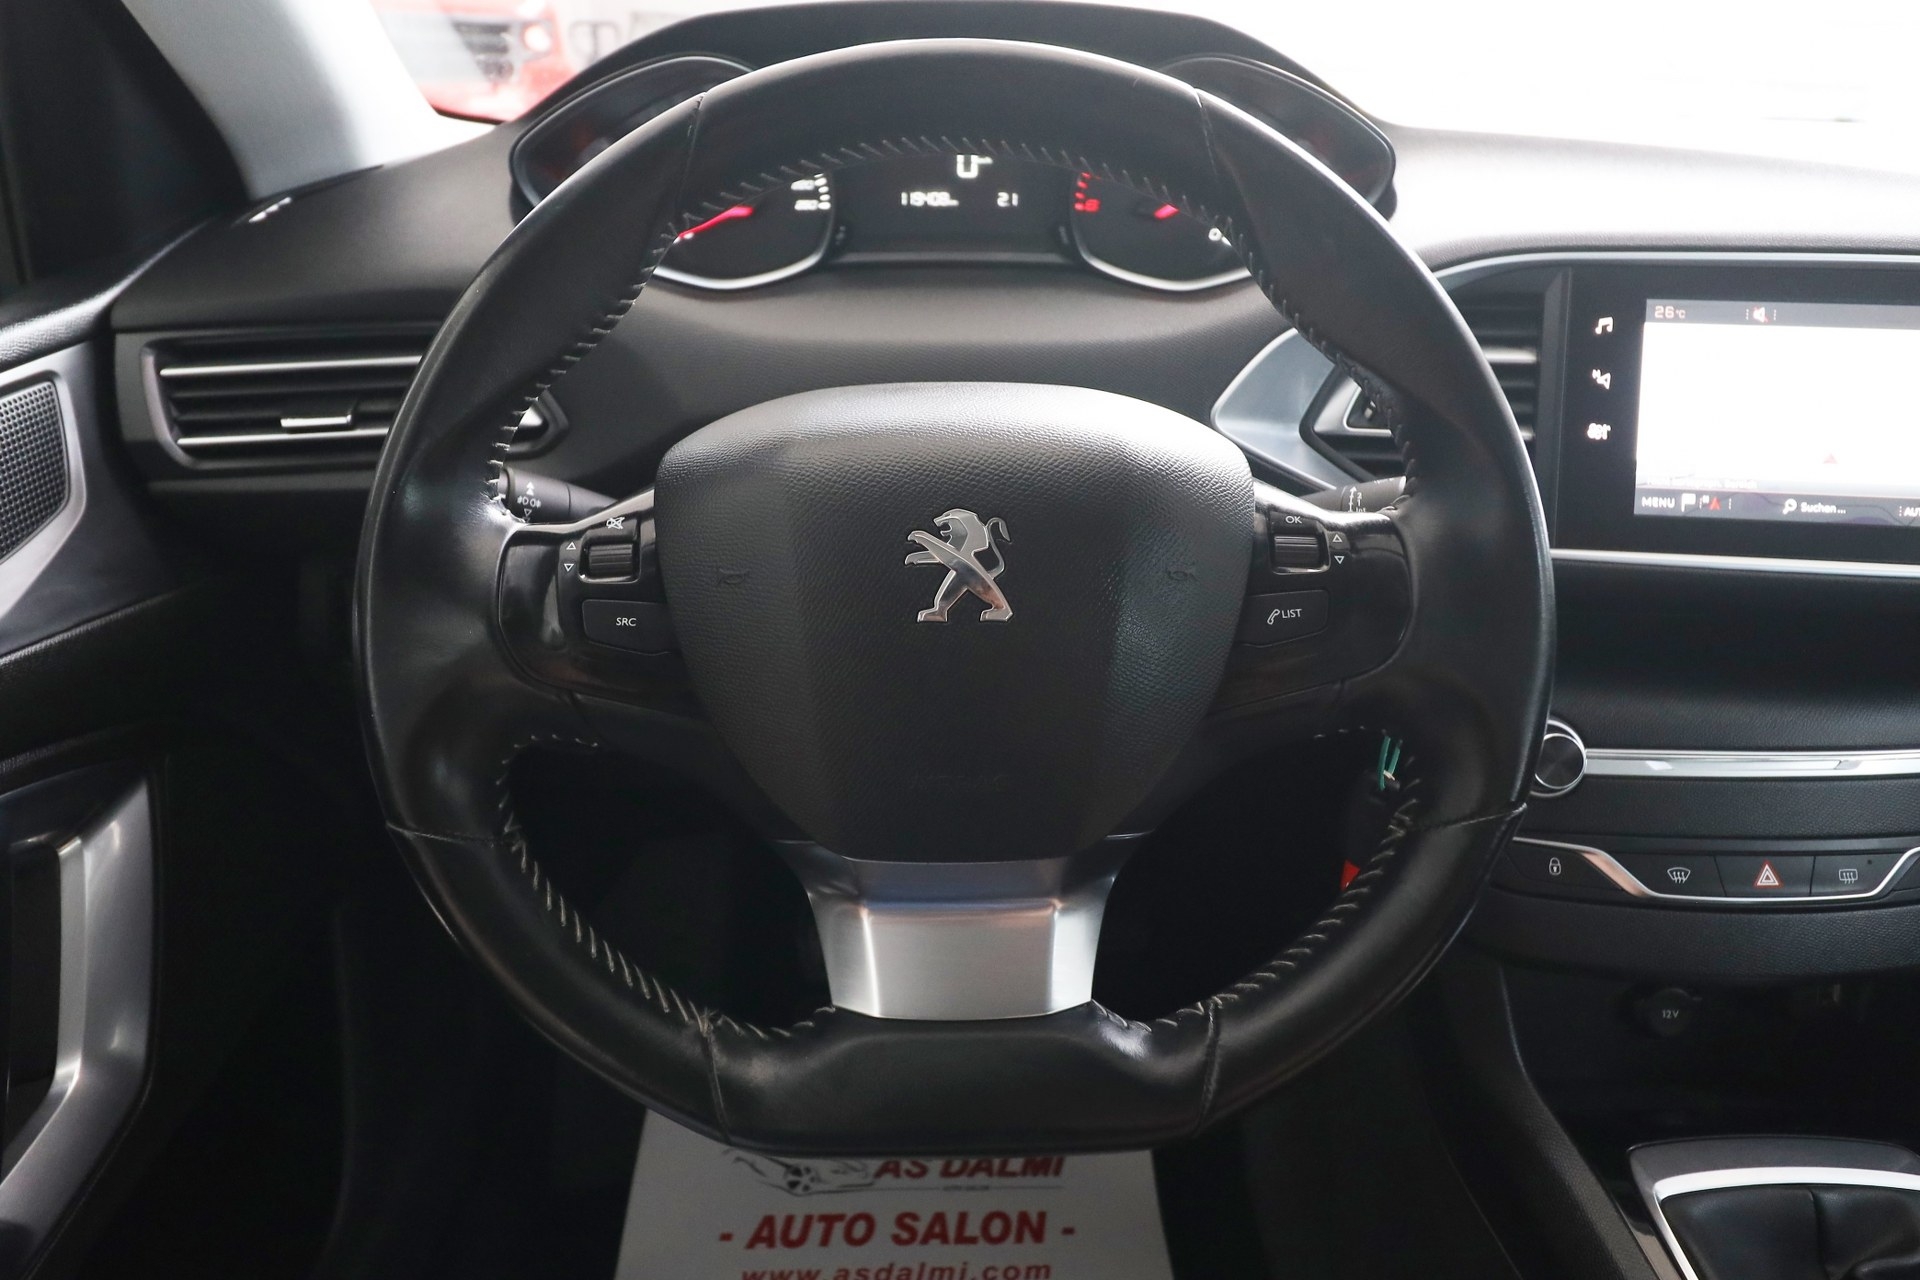 Peugeot 308 1.6 BlueHDI 120 KS Allure Sport EXCLUSIVE PLUS Navigacija Parktronic Facelift MAX-VOLL -New Modell 2019-